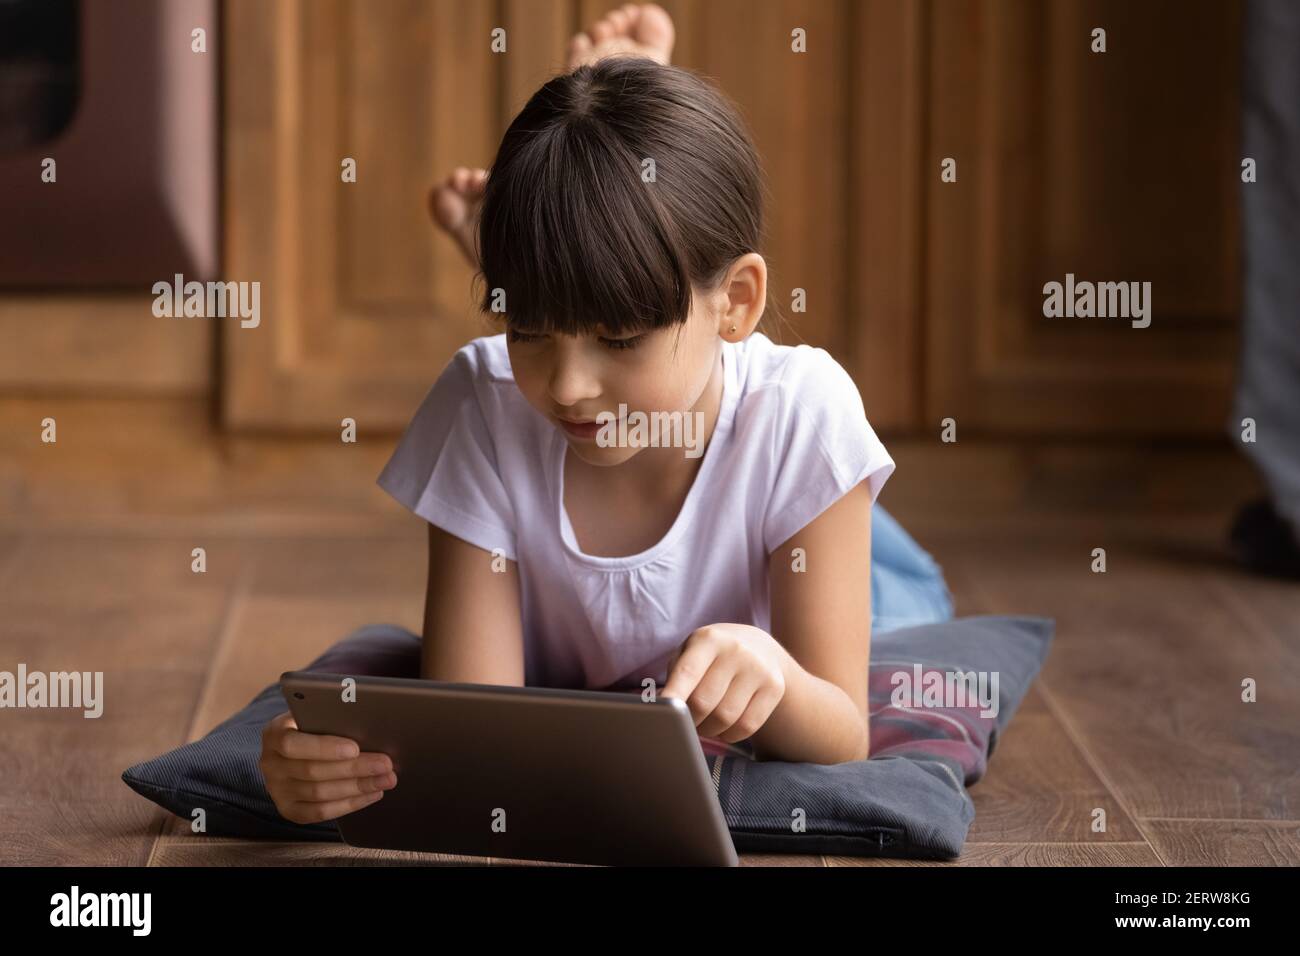 Small Latino girl use modern tablet gadget Stock Photo